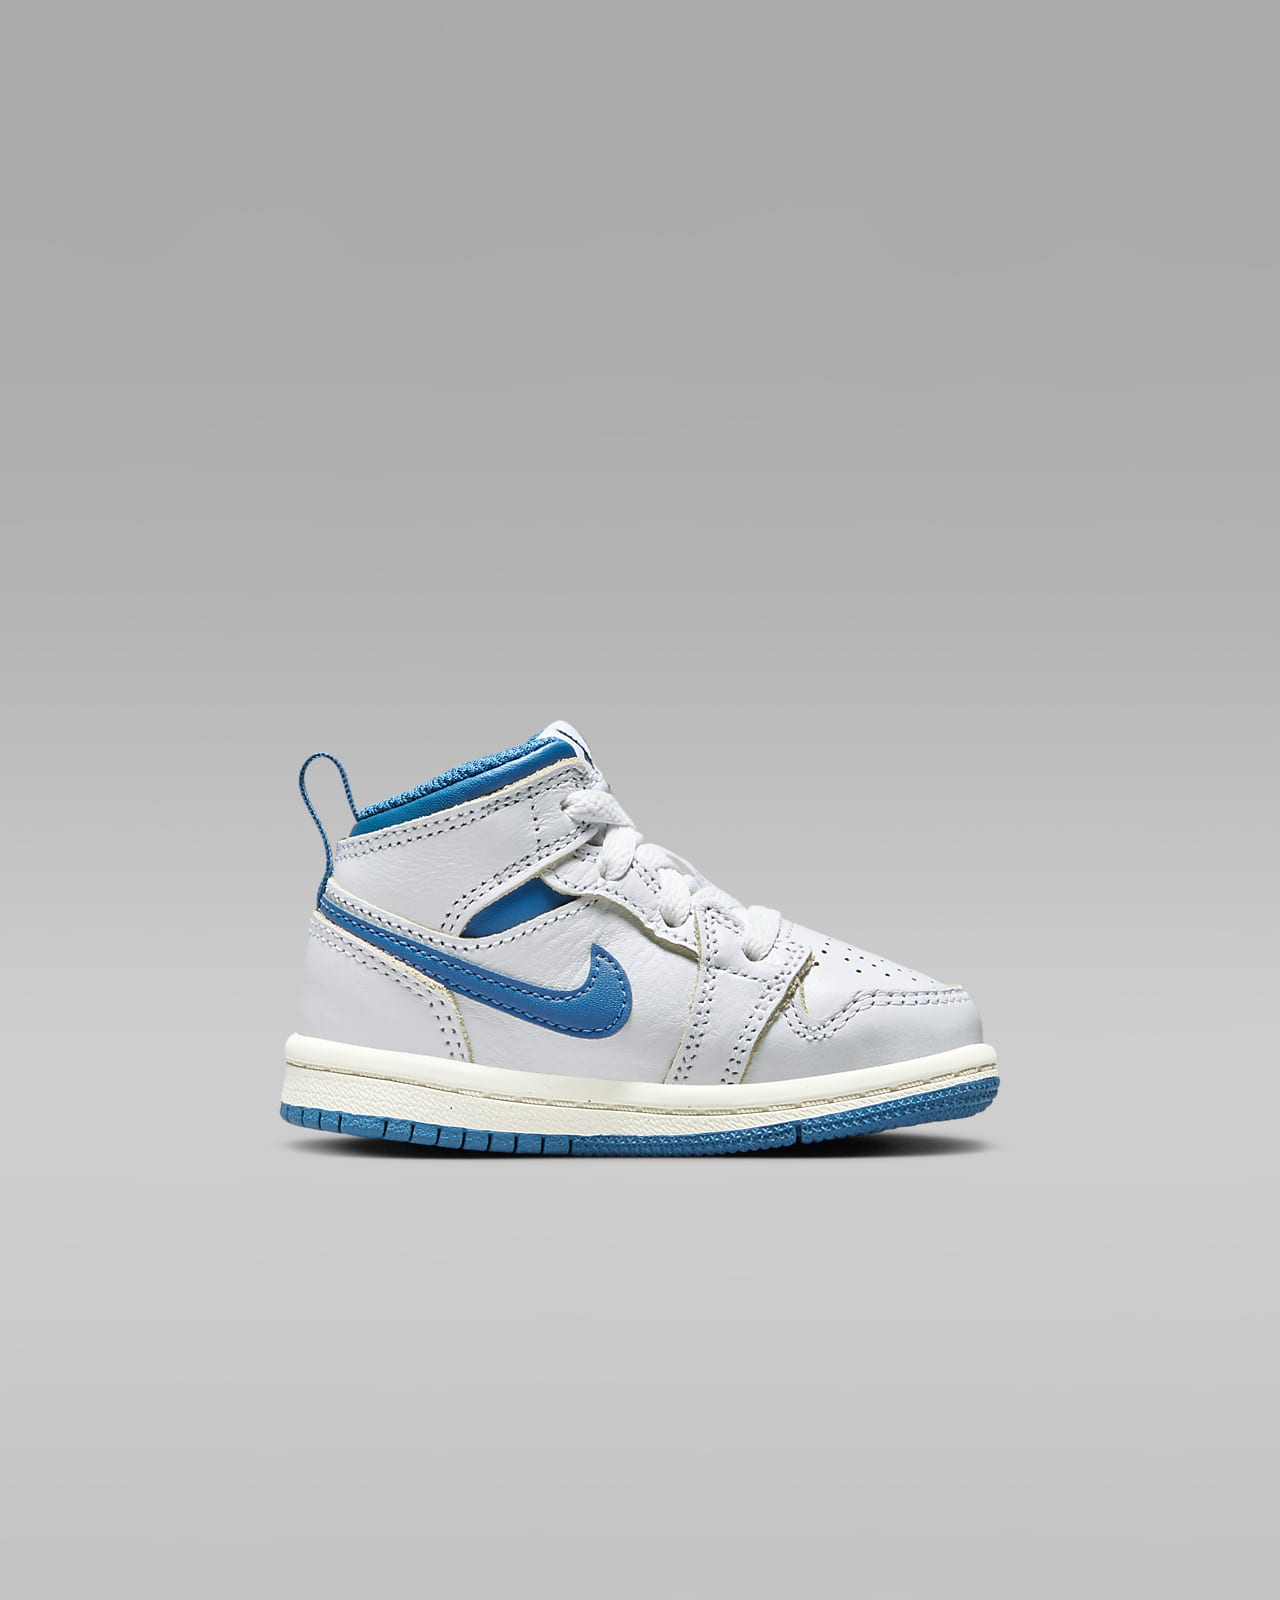 Jordan 1 Mid SE Baby/Toddler Shoes. Nike.com